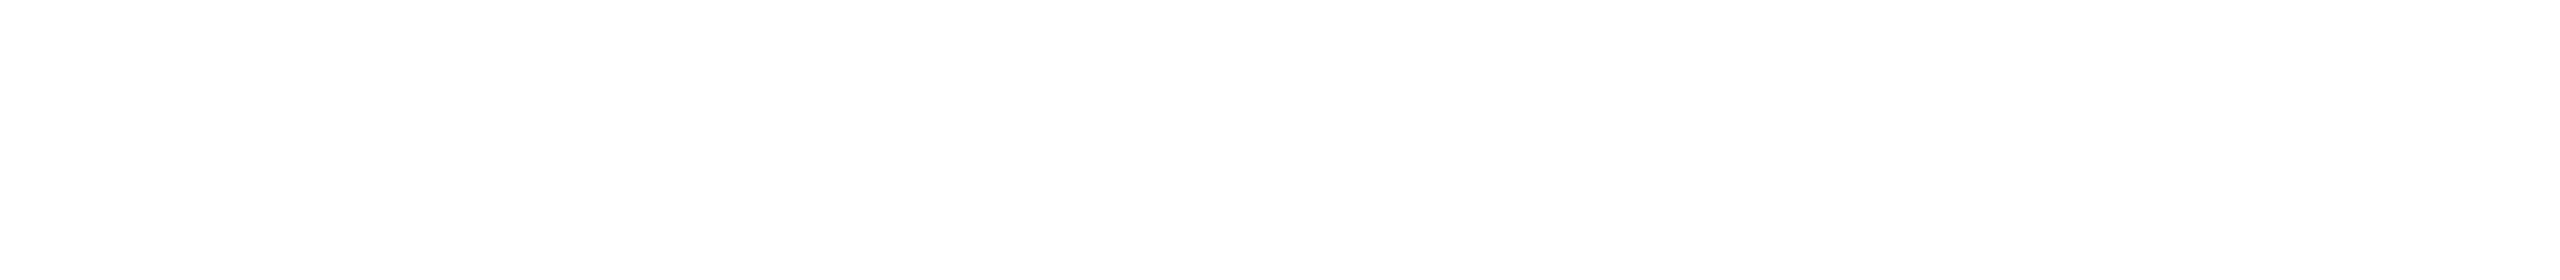 Logo DIEFFENBACHER white